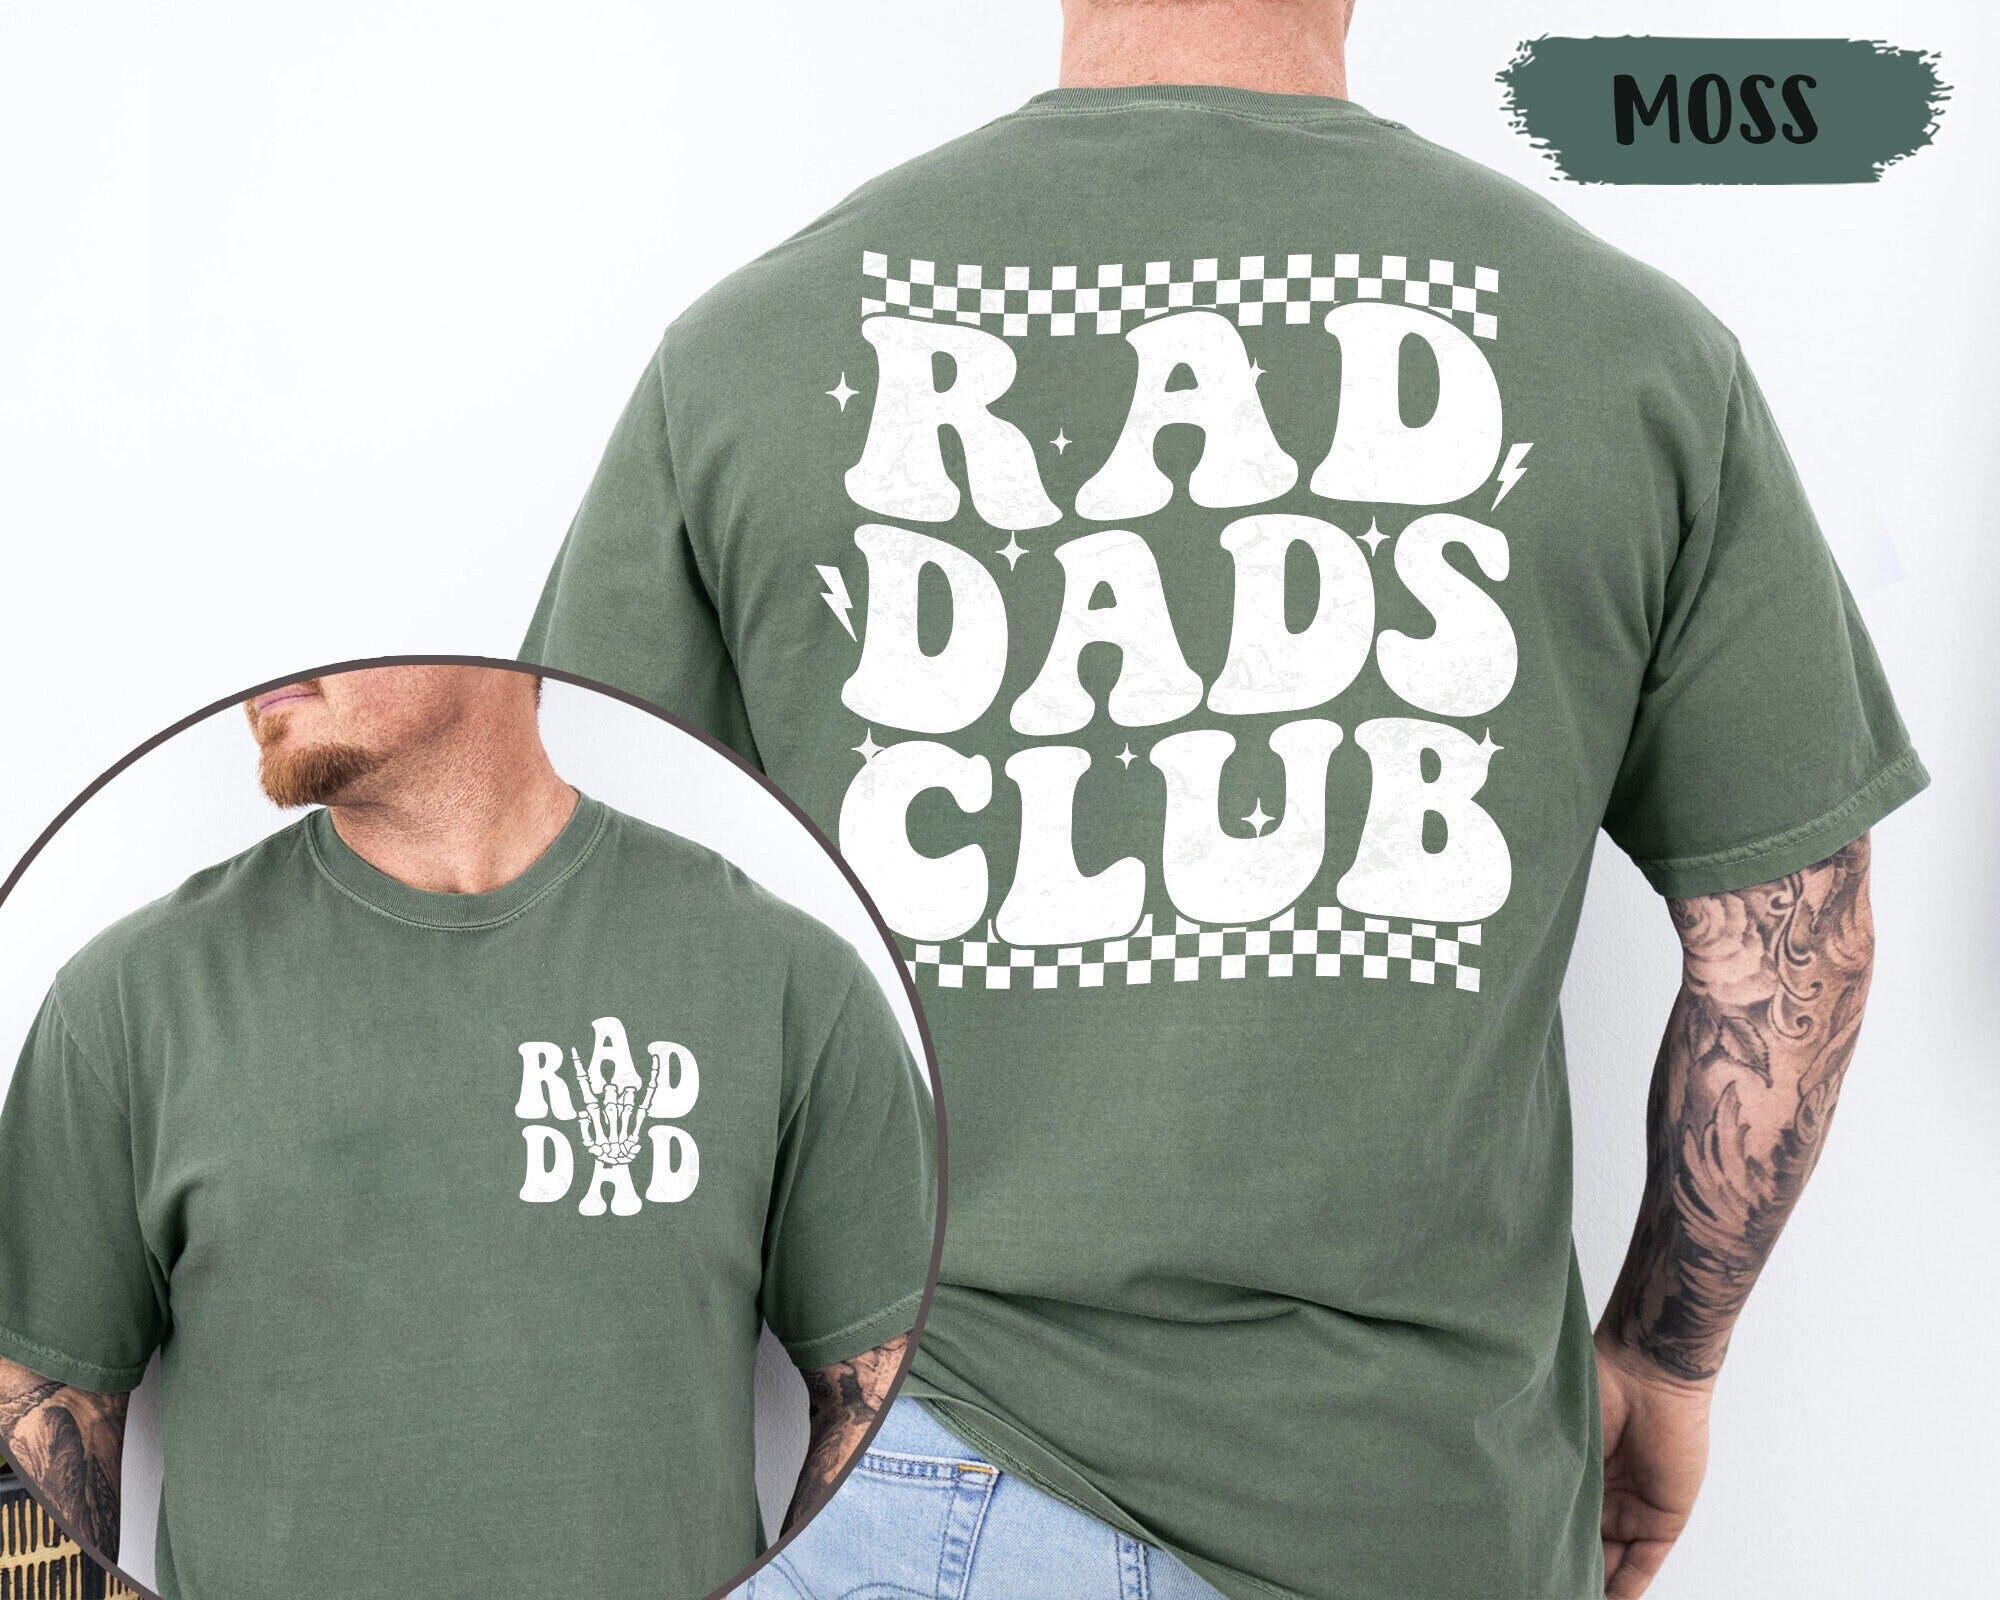 Rad Dad Club Shirt, Cool Dad Shirt, Retro Dad Shirt, Fathers Day Shirt Gift for Dad, Funny Shirt for Husband, Skeleton Shirt, Comfort Colors